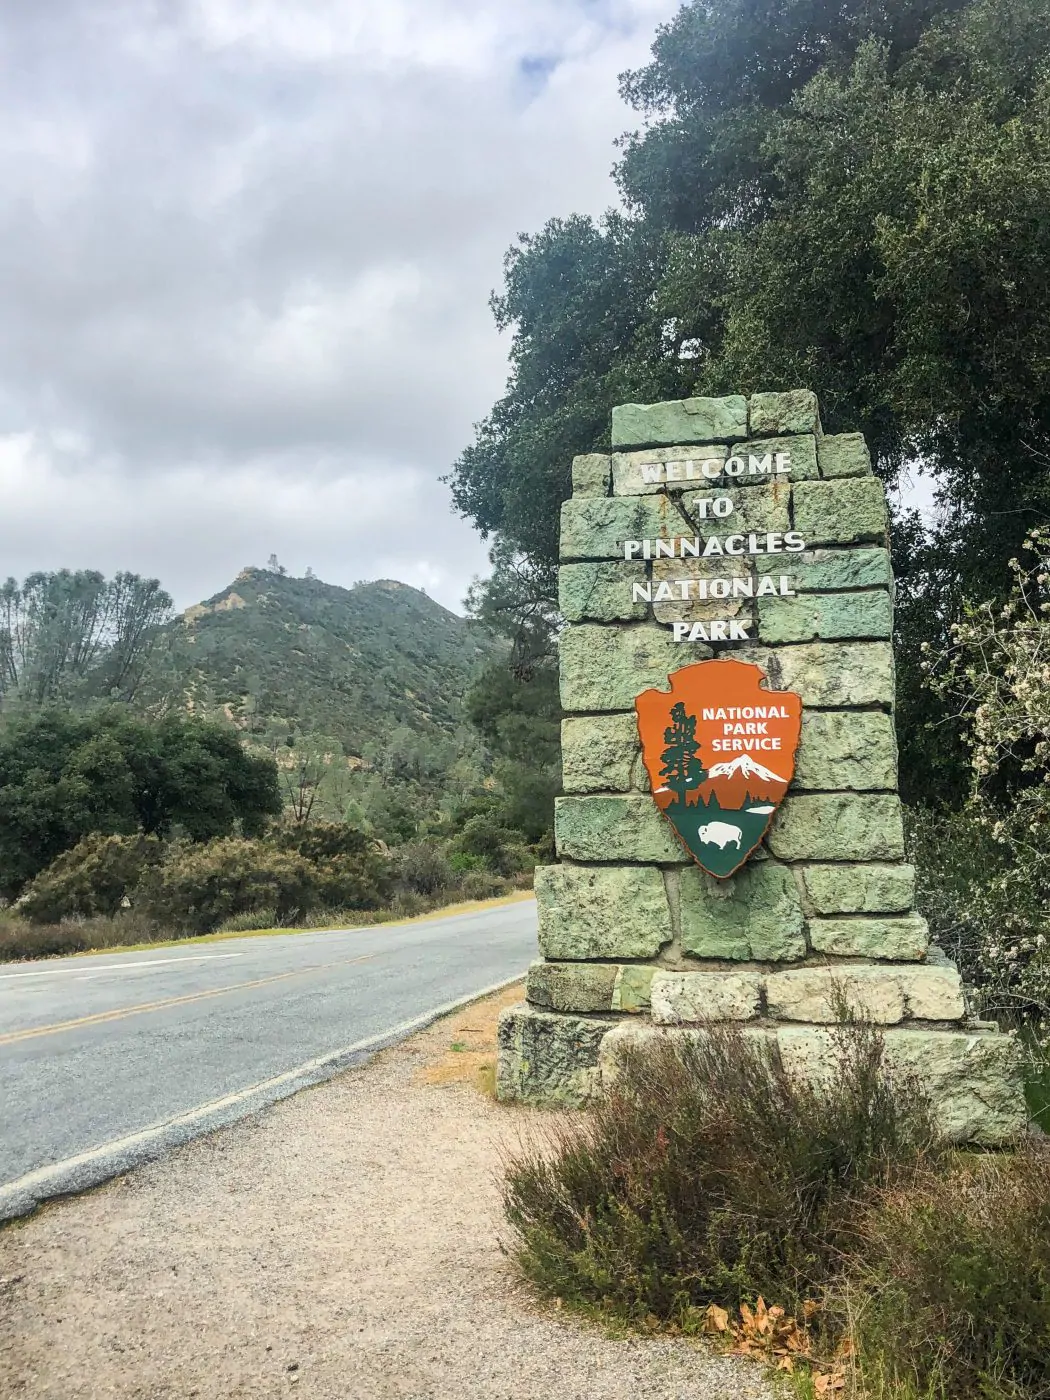 East Entrance Pinnacles National Park sign